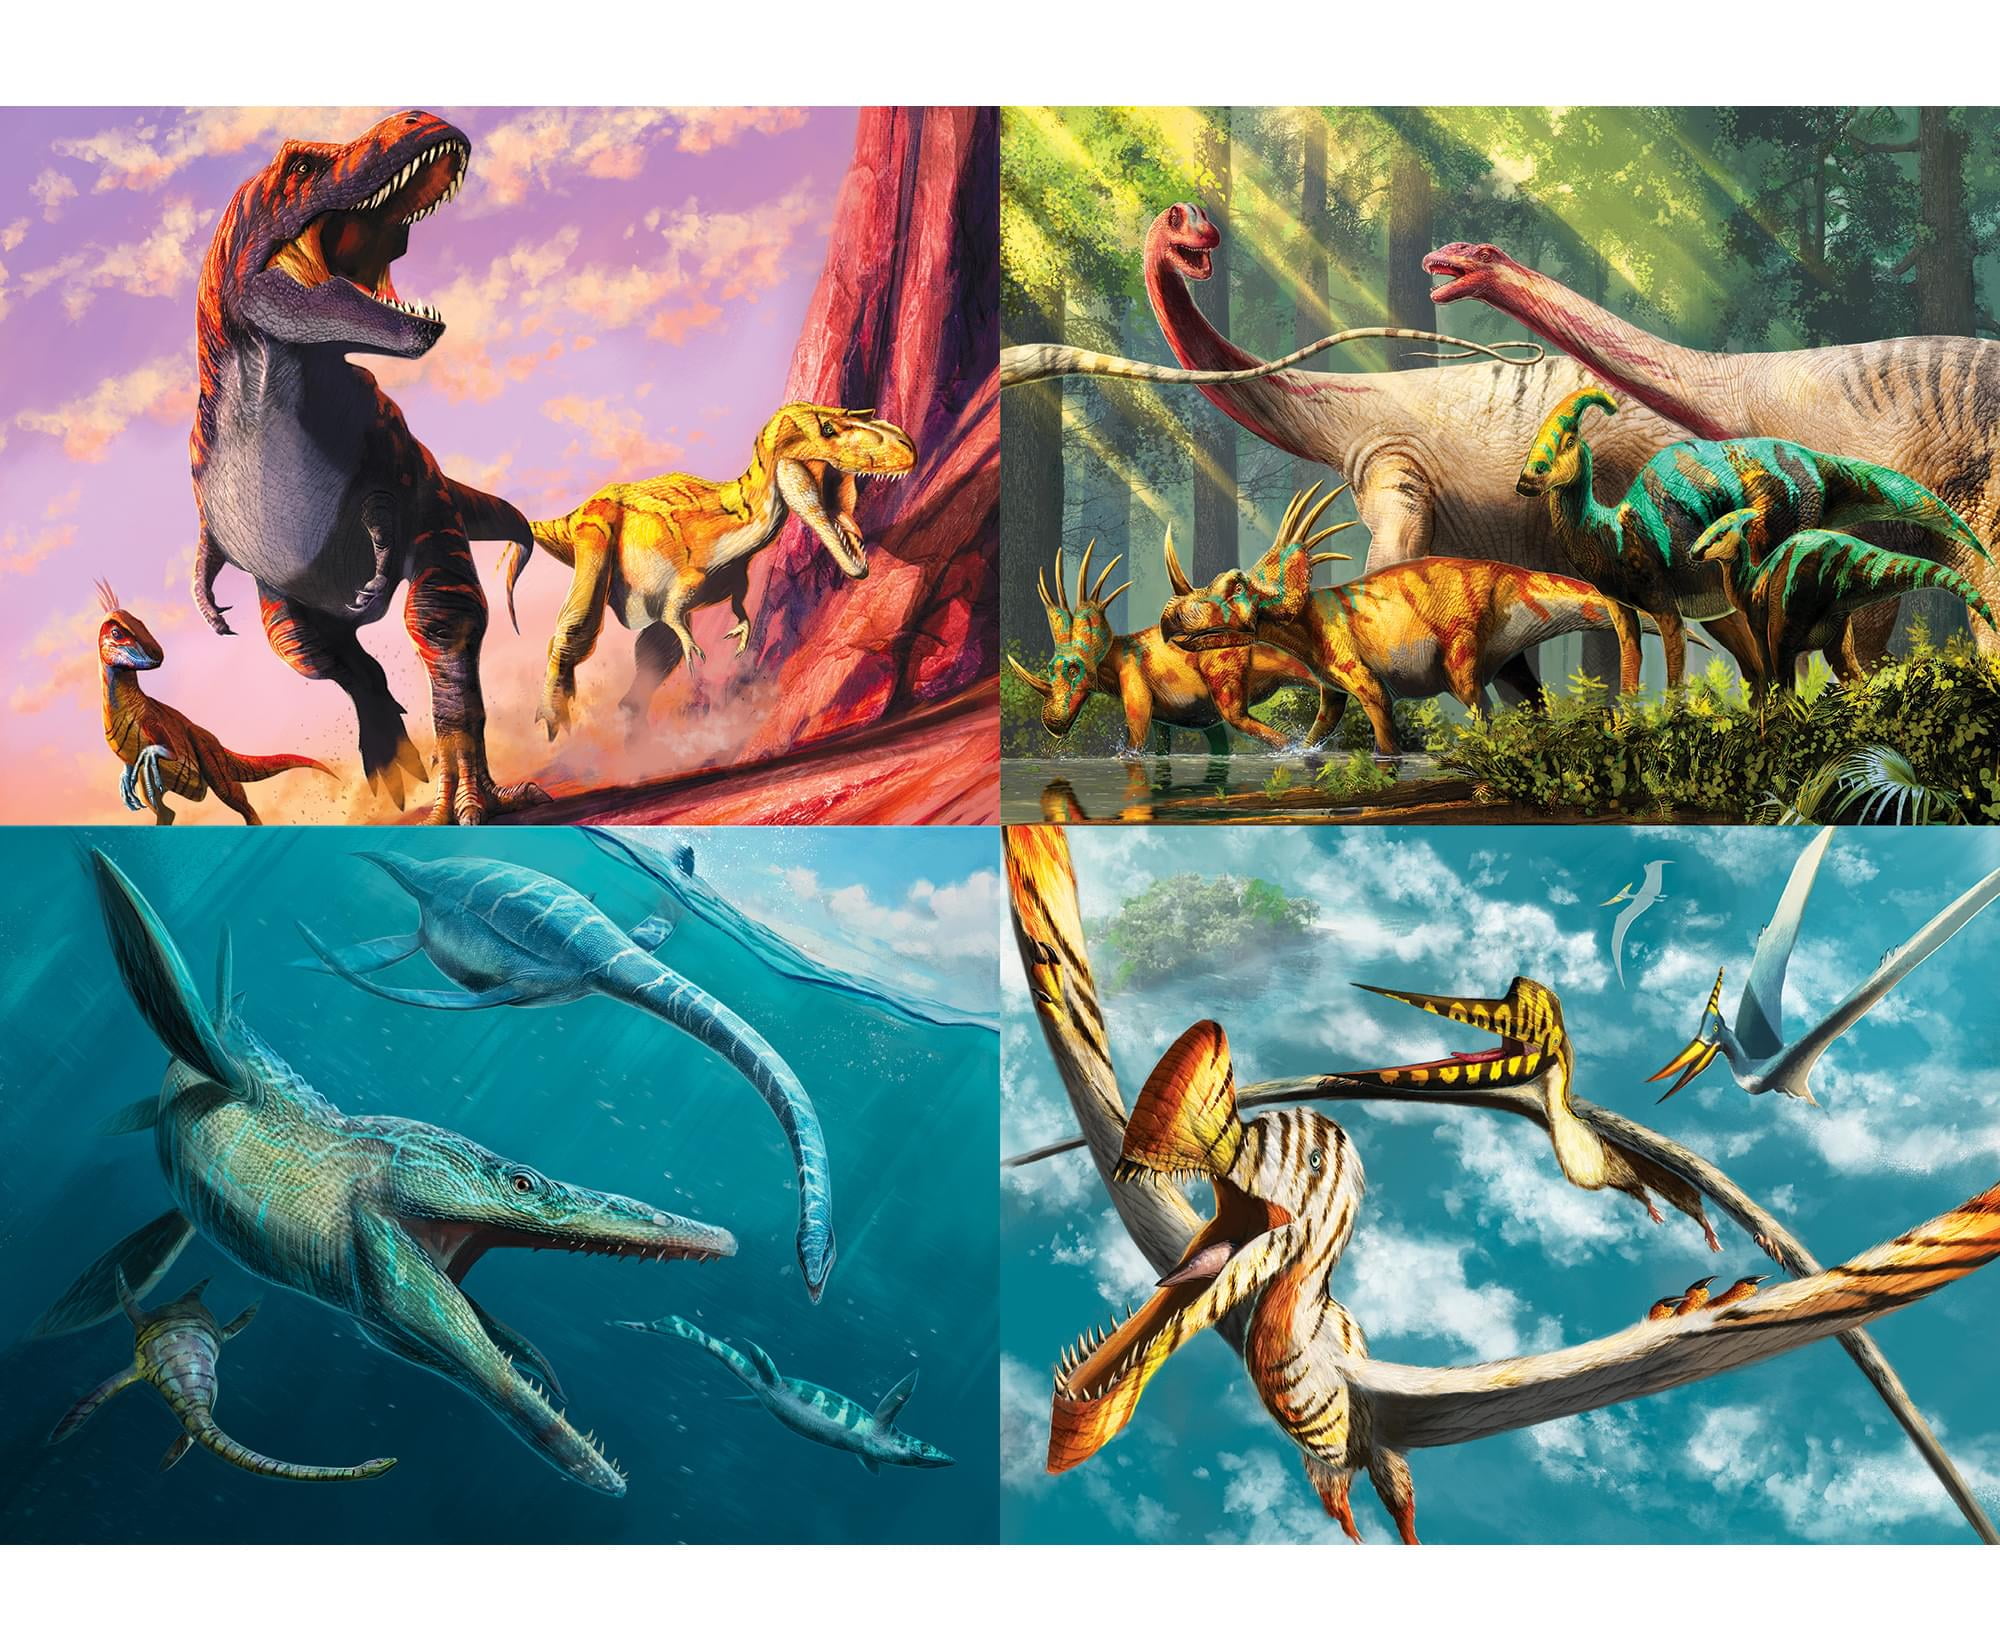 Jurassic World Dinosaurs 100 Piece Jigsaw Puzzle Lot of 2 NEW FREE SHIPPING! 